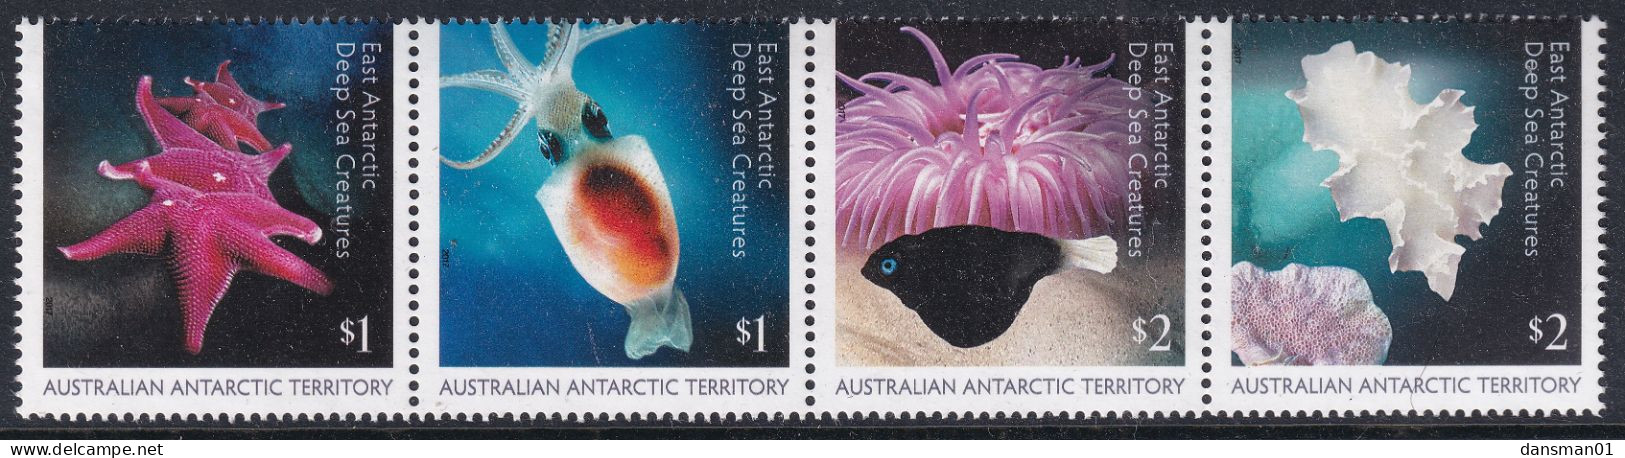 Australian Antarctic Territory 2017 Deep Sea Creatures Mint Never Hinged - Mint Stamps